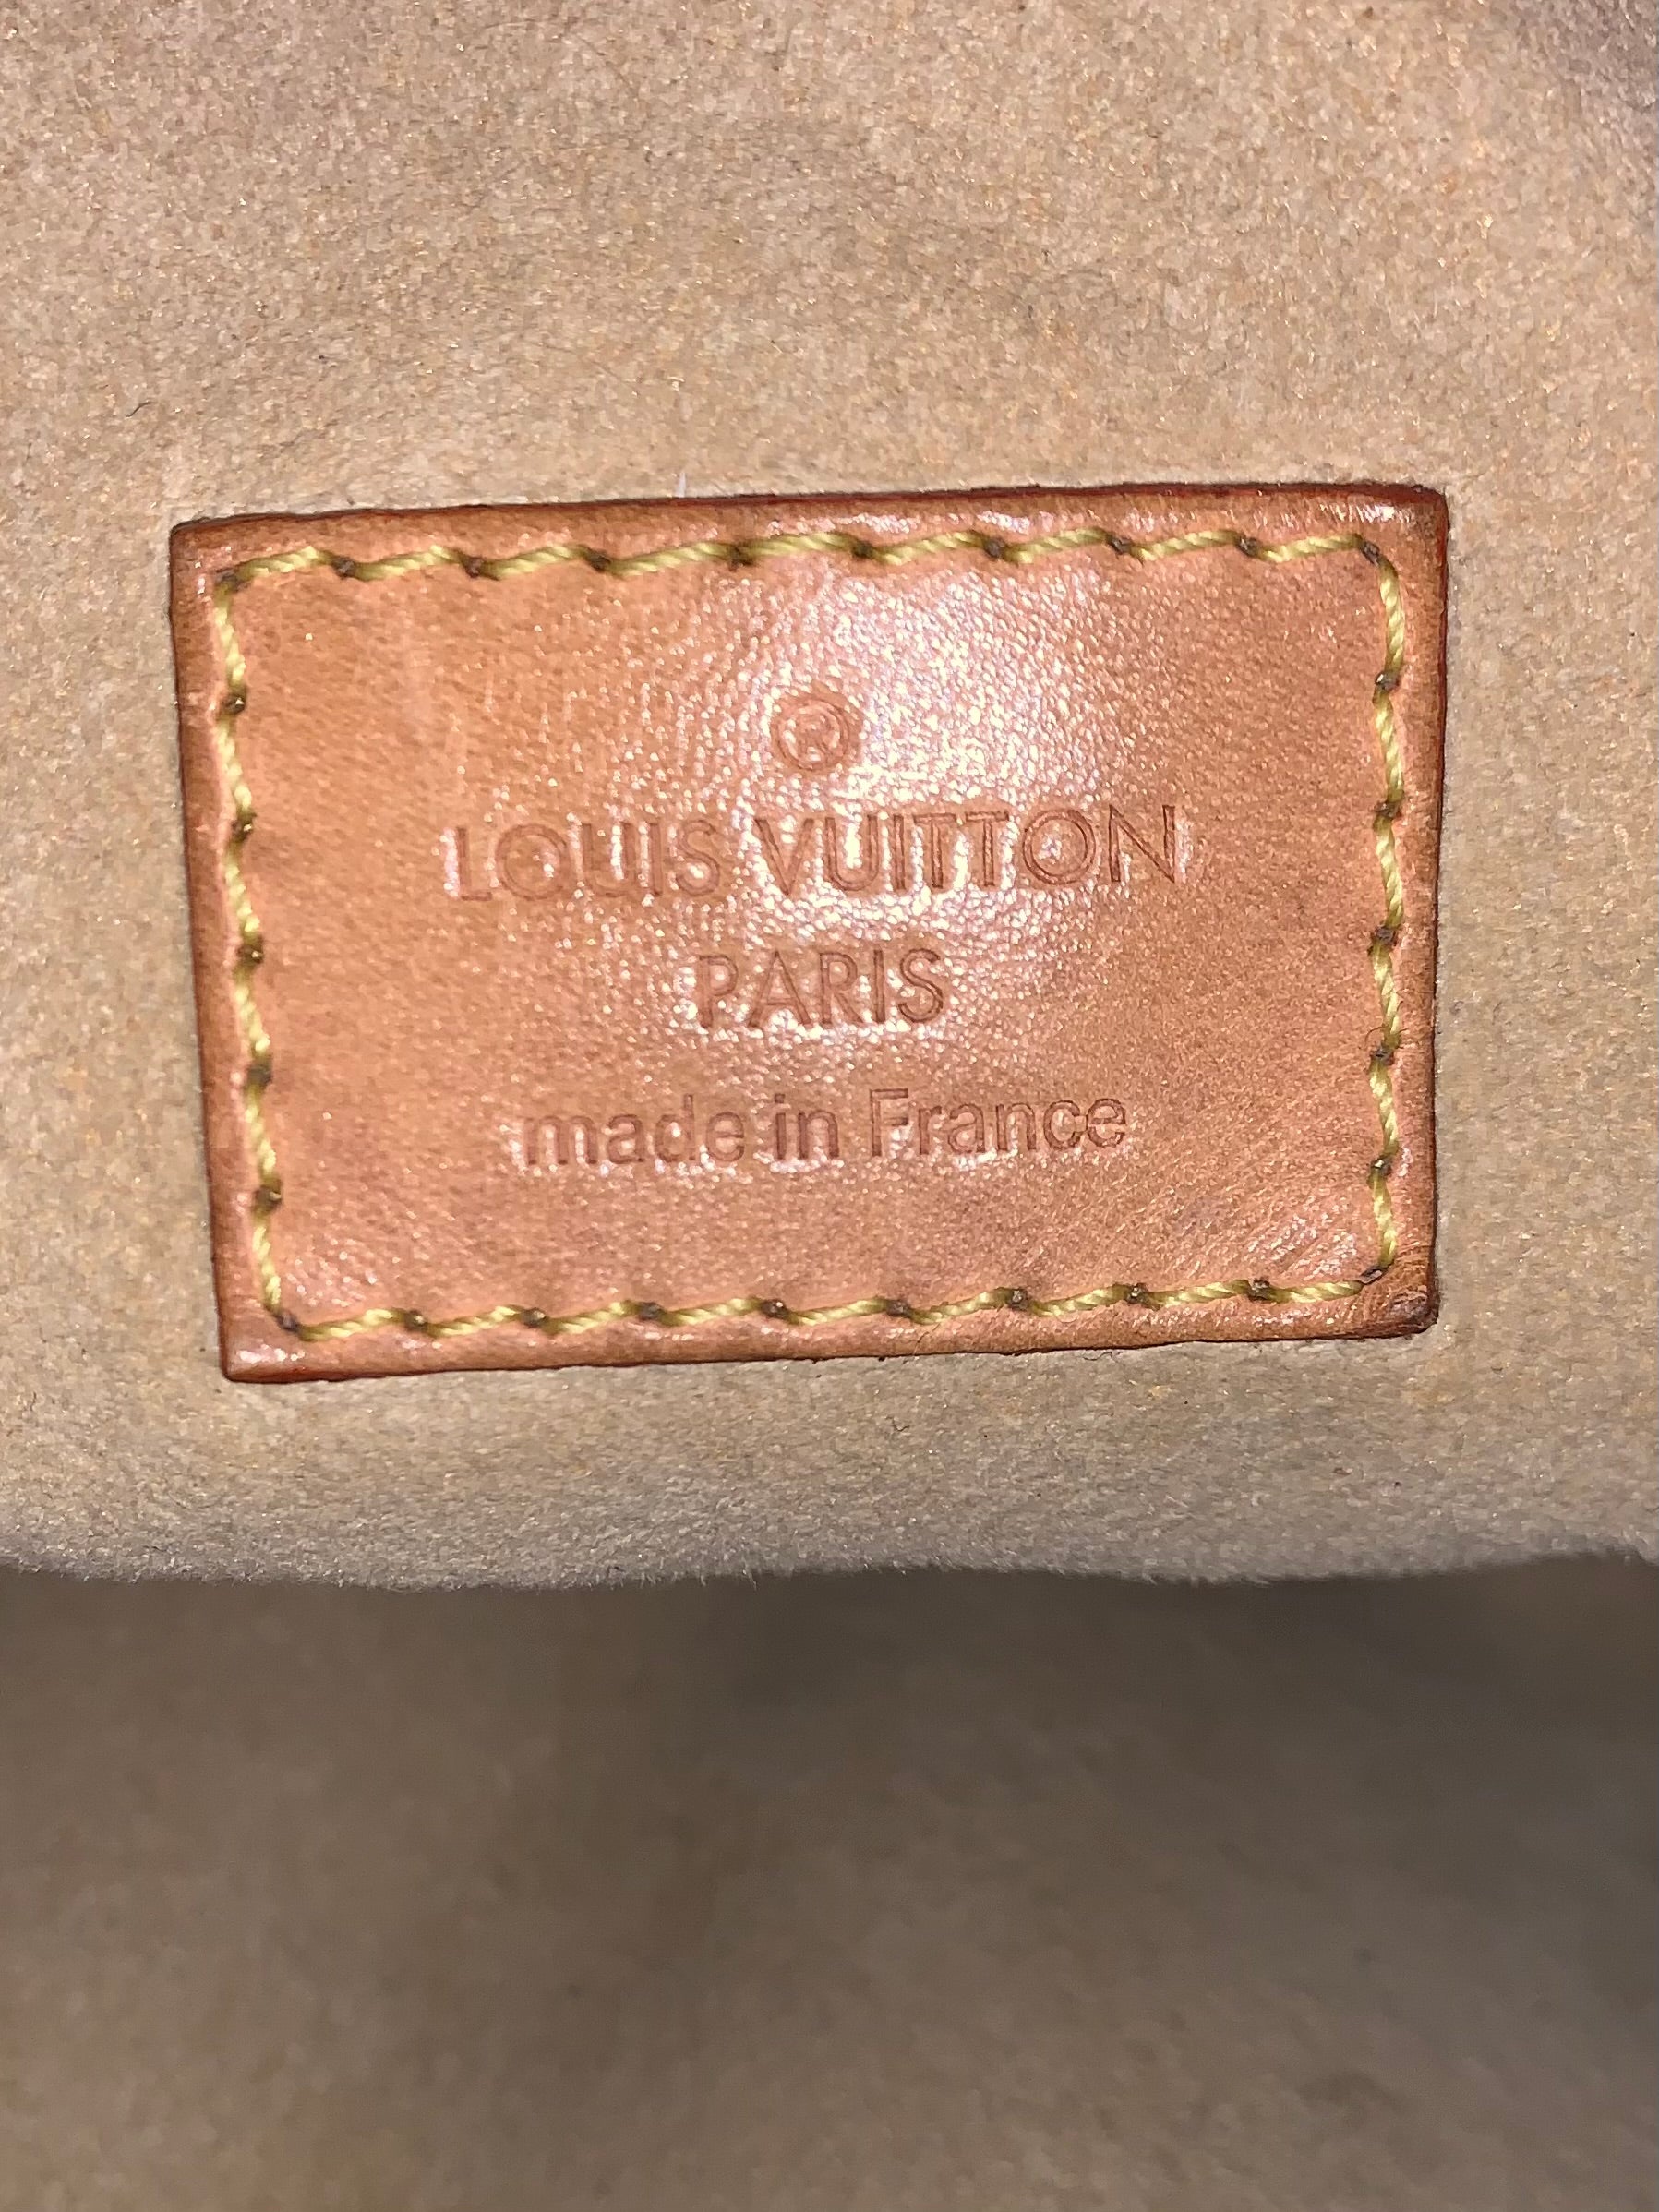 Authentic Louis Vuitton Monogram Eden Handbag With Strap And